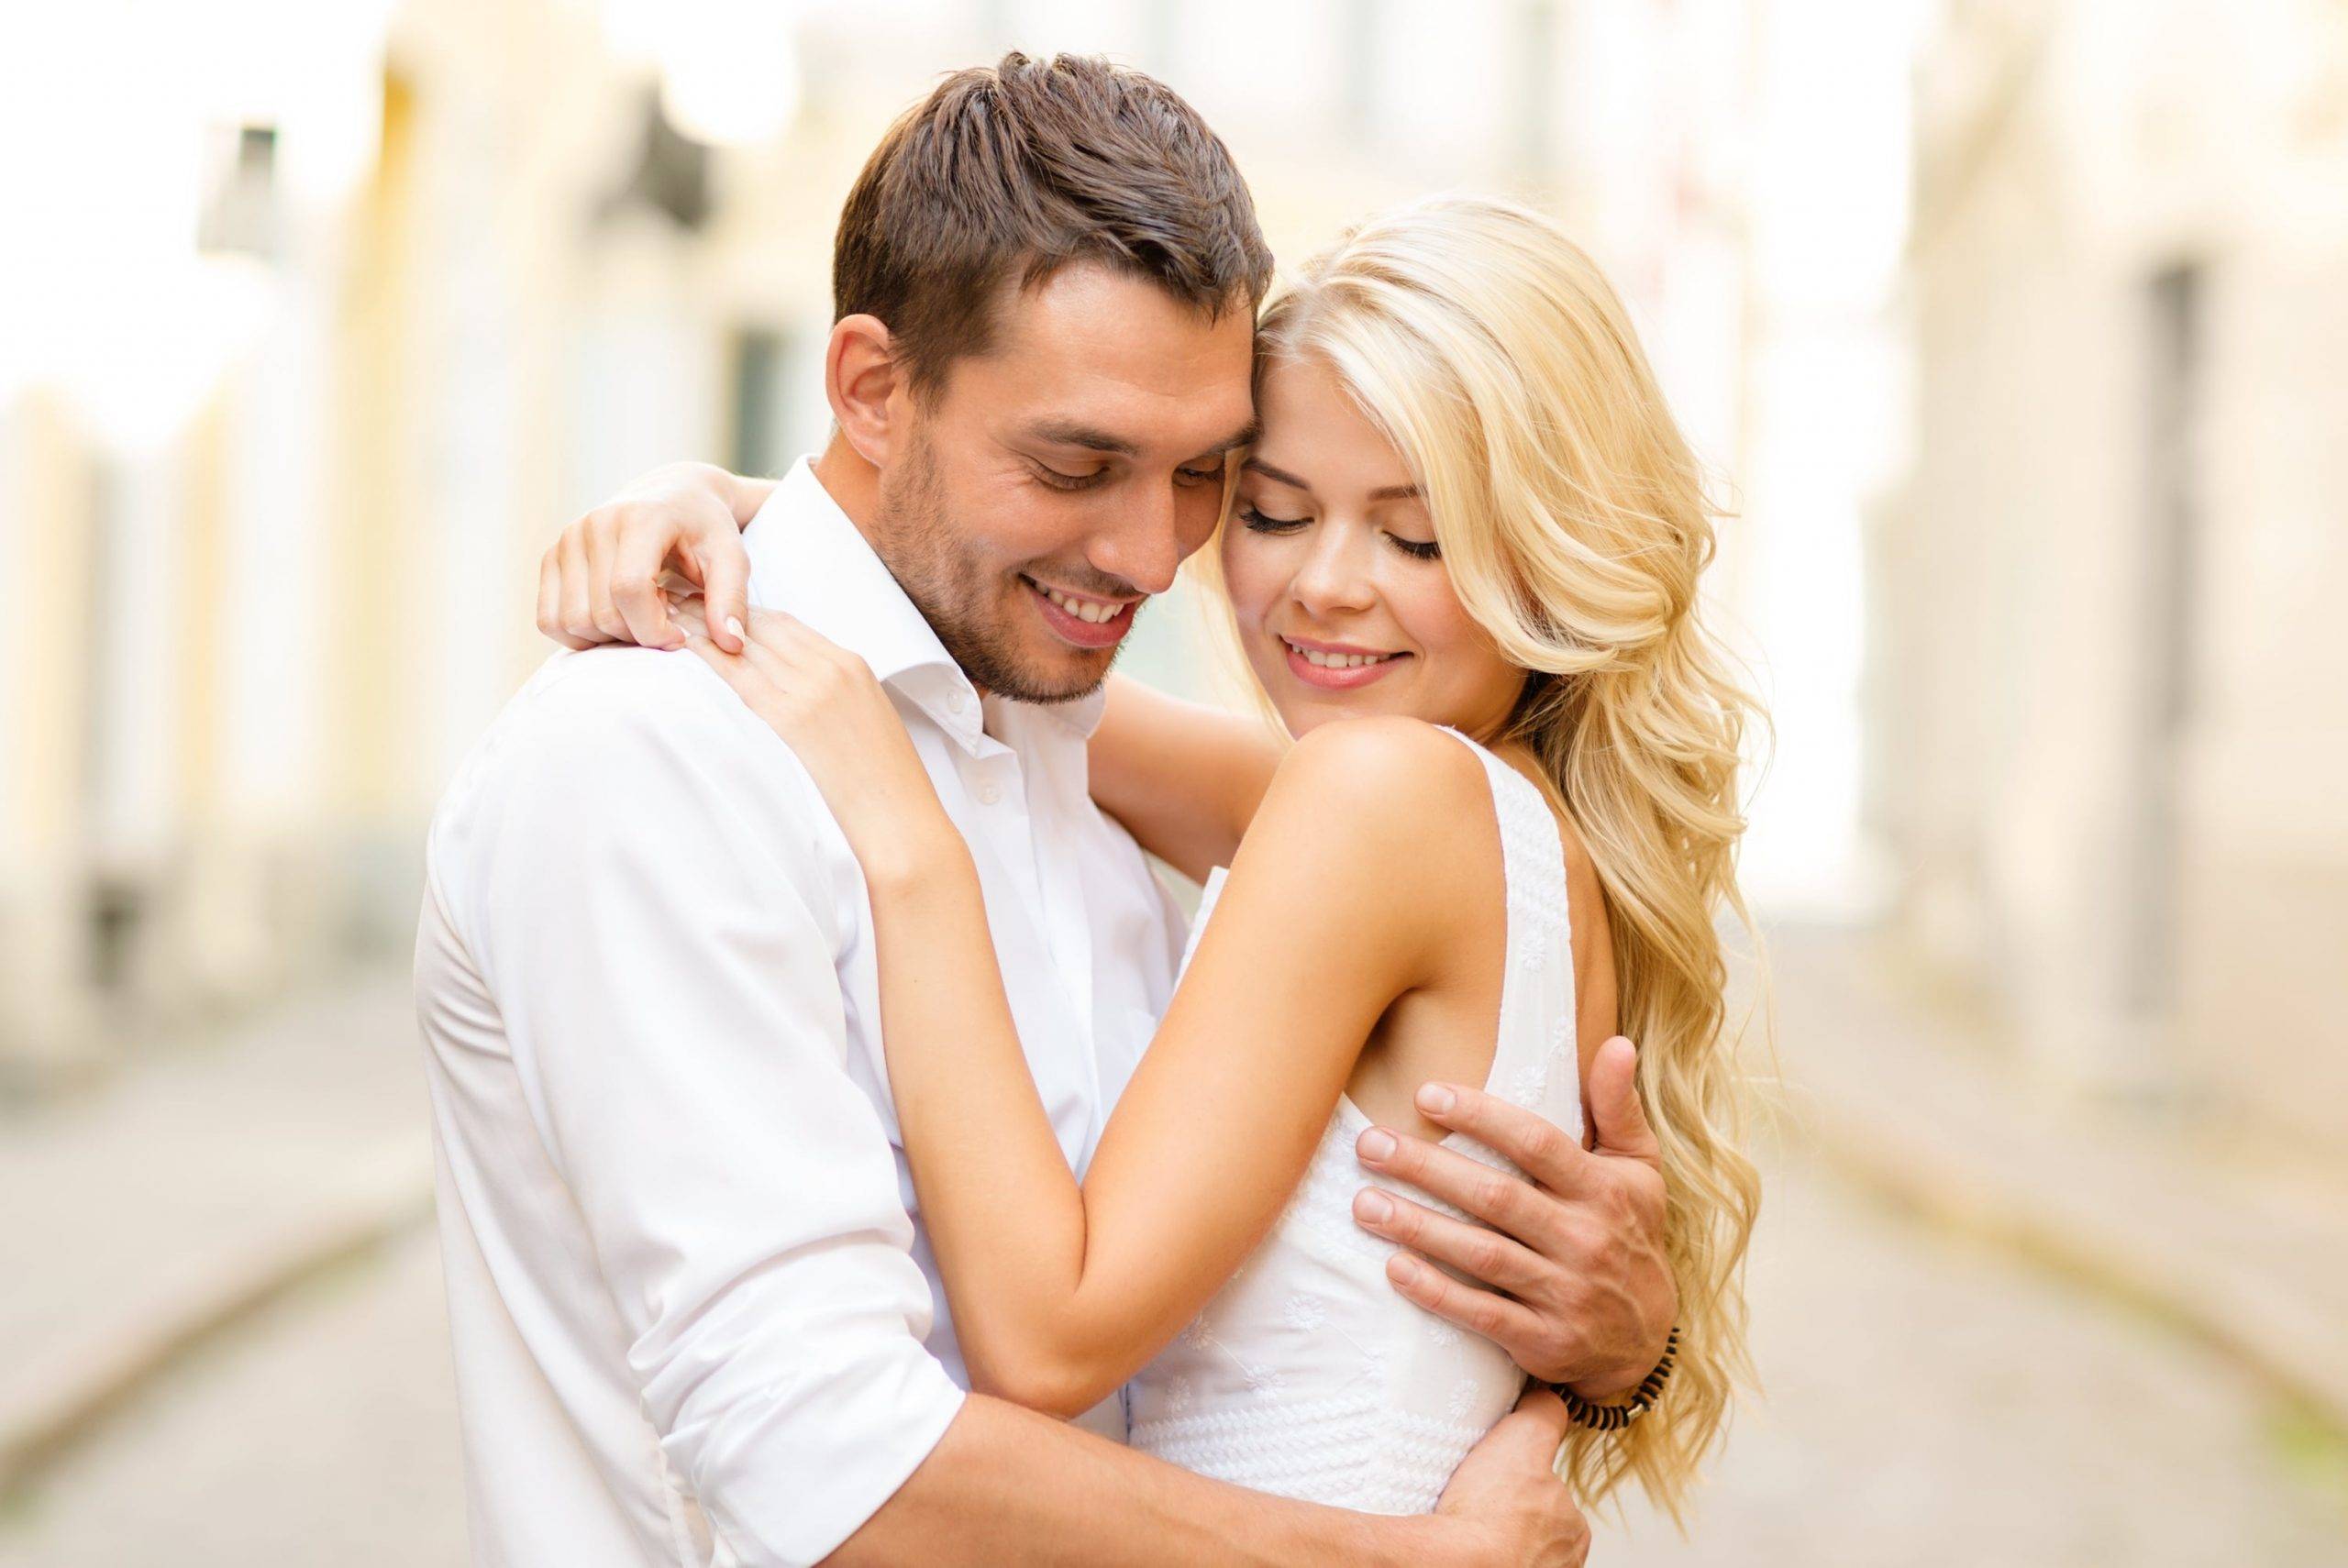 6 Romantic Anniversary ideas to woo your partner